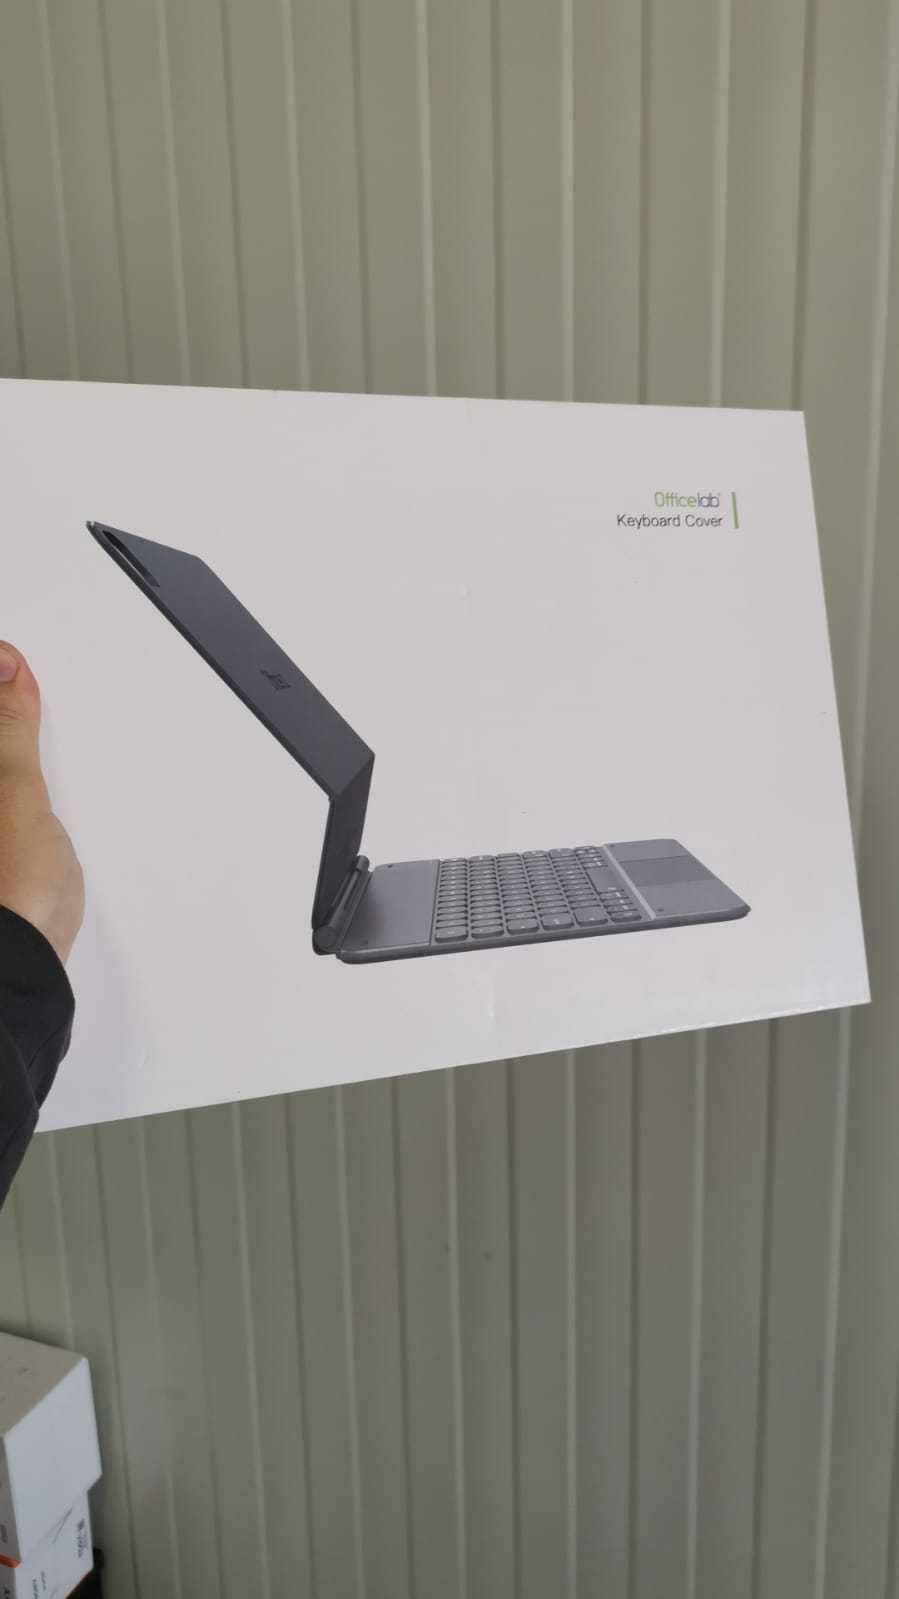 Tastatura Officelab 12.9-inch  for iPad Pro (5th/4th/3rd Generation